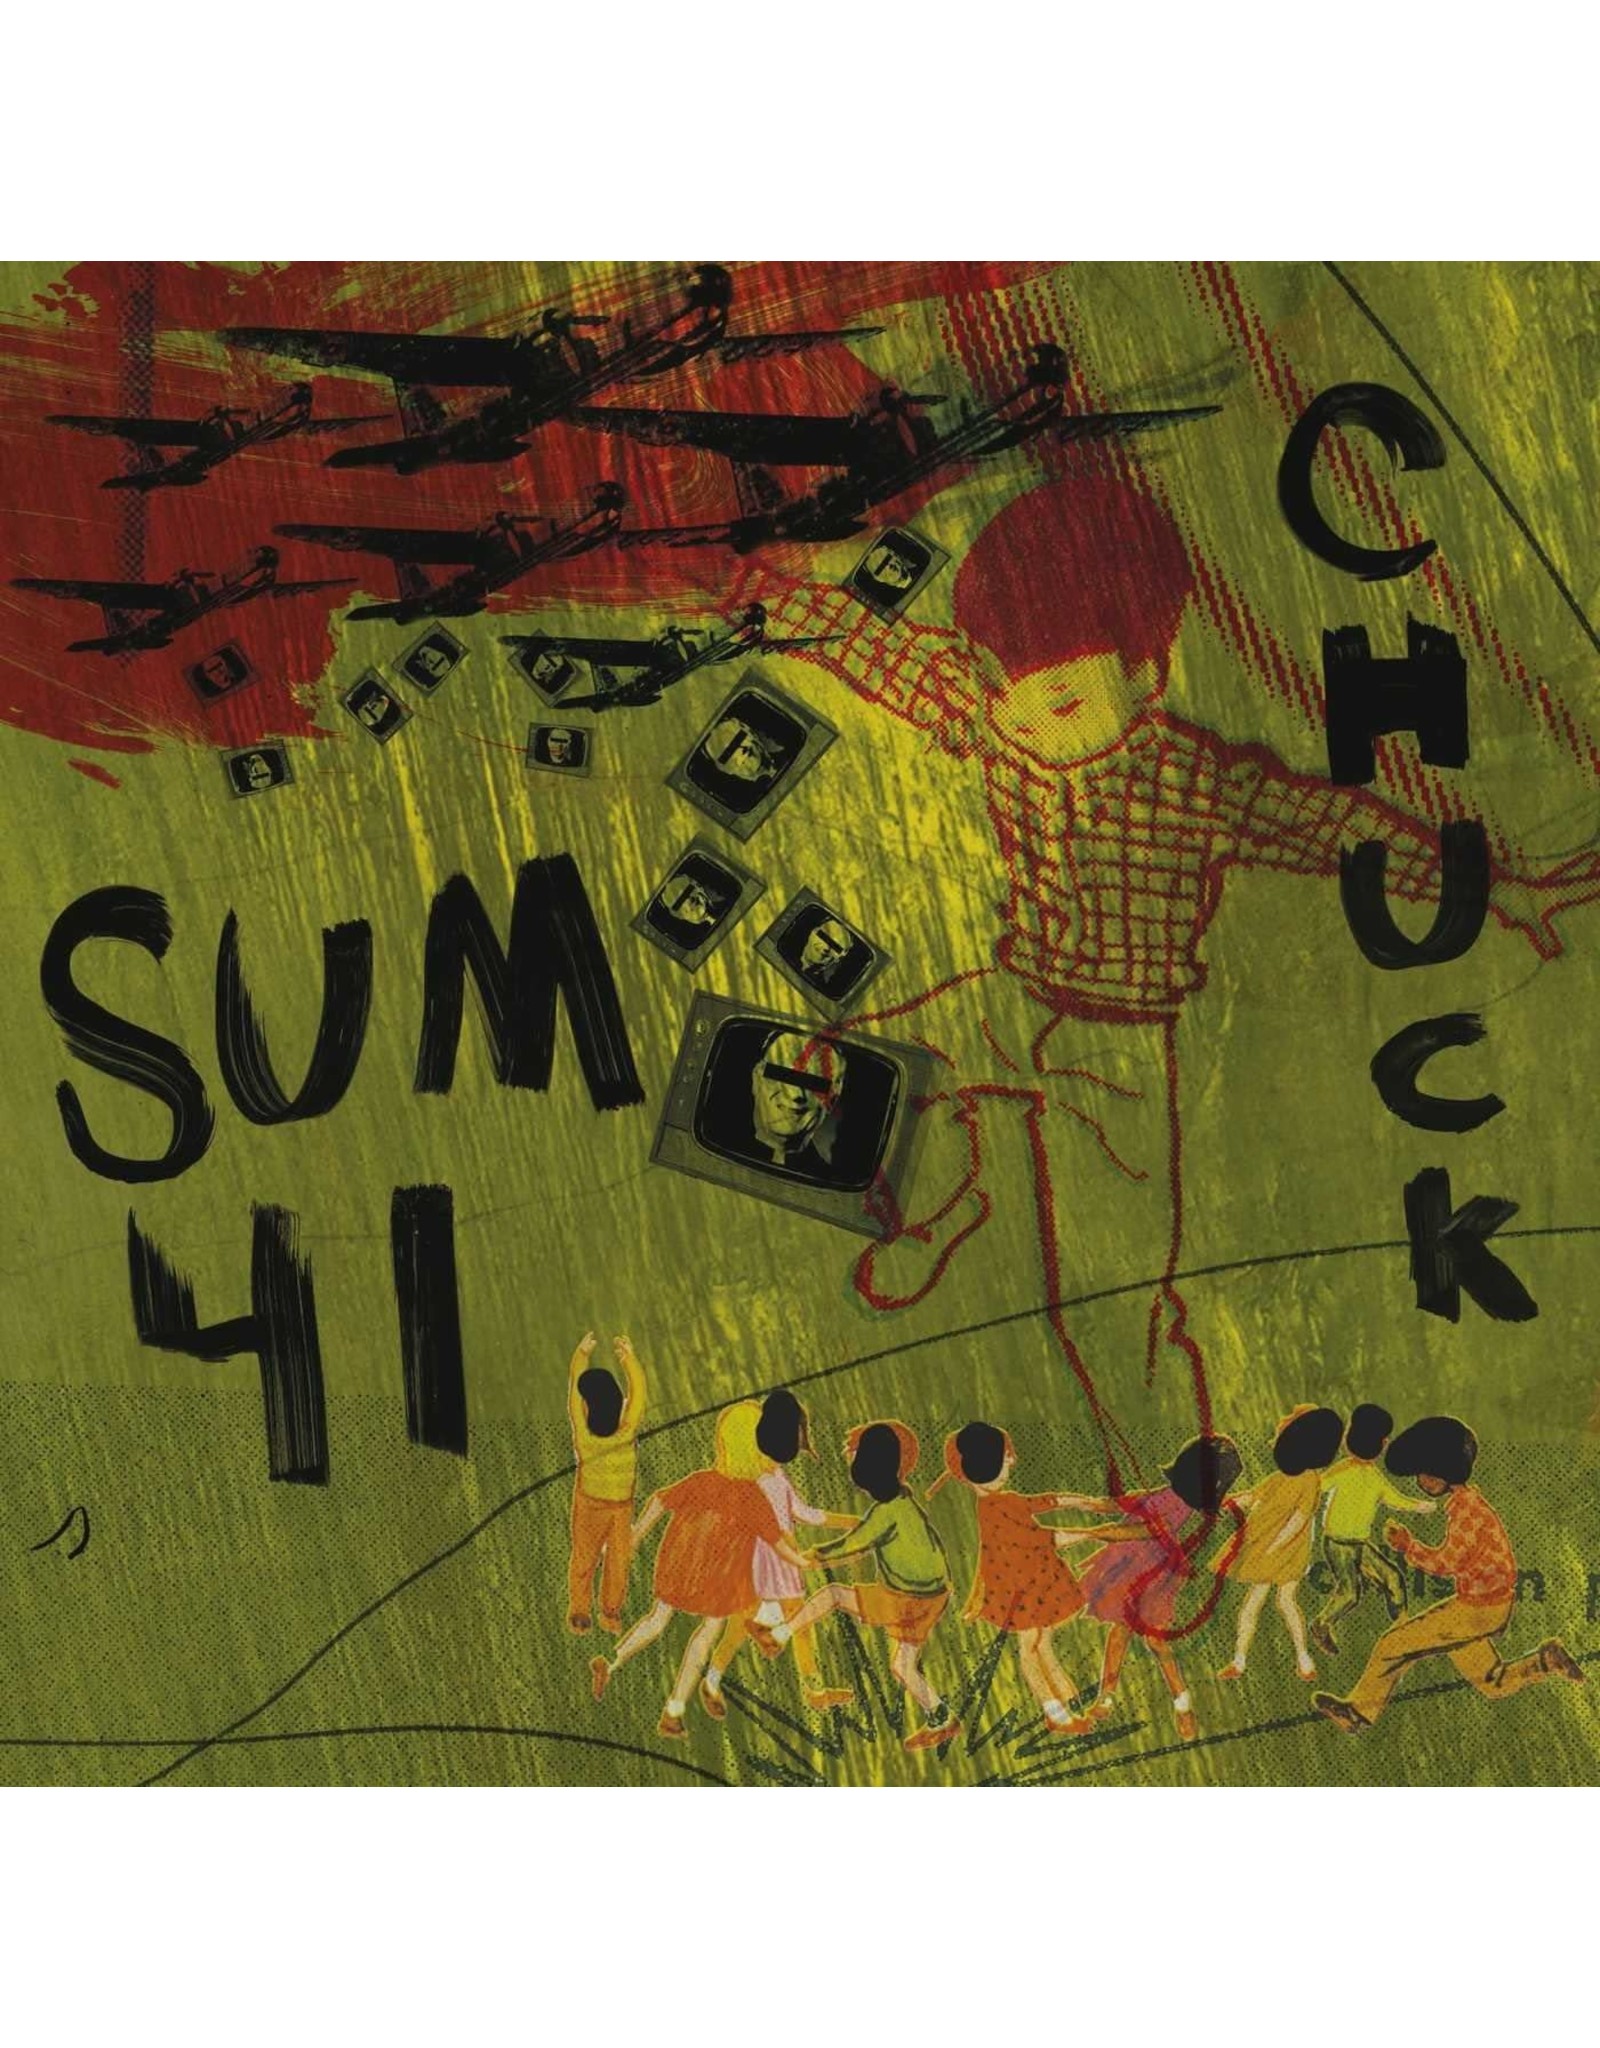 SUM 41 - Chuck (Translucent Blue Splash Vinyl)